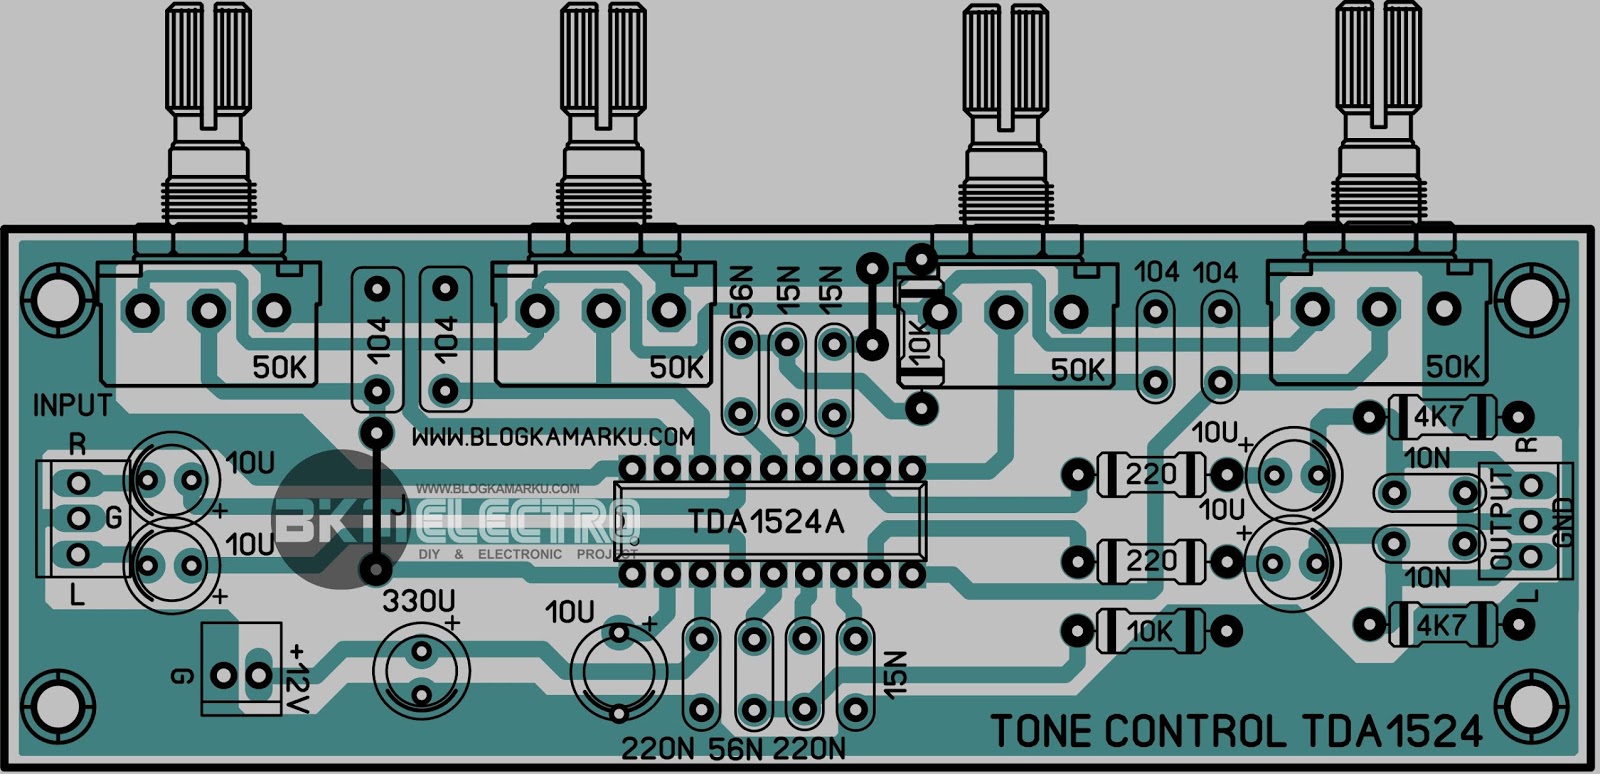 Layout Tone  Control  TDA 1524 PCB  stereo BLOGKAMARKU